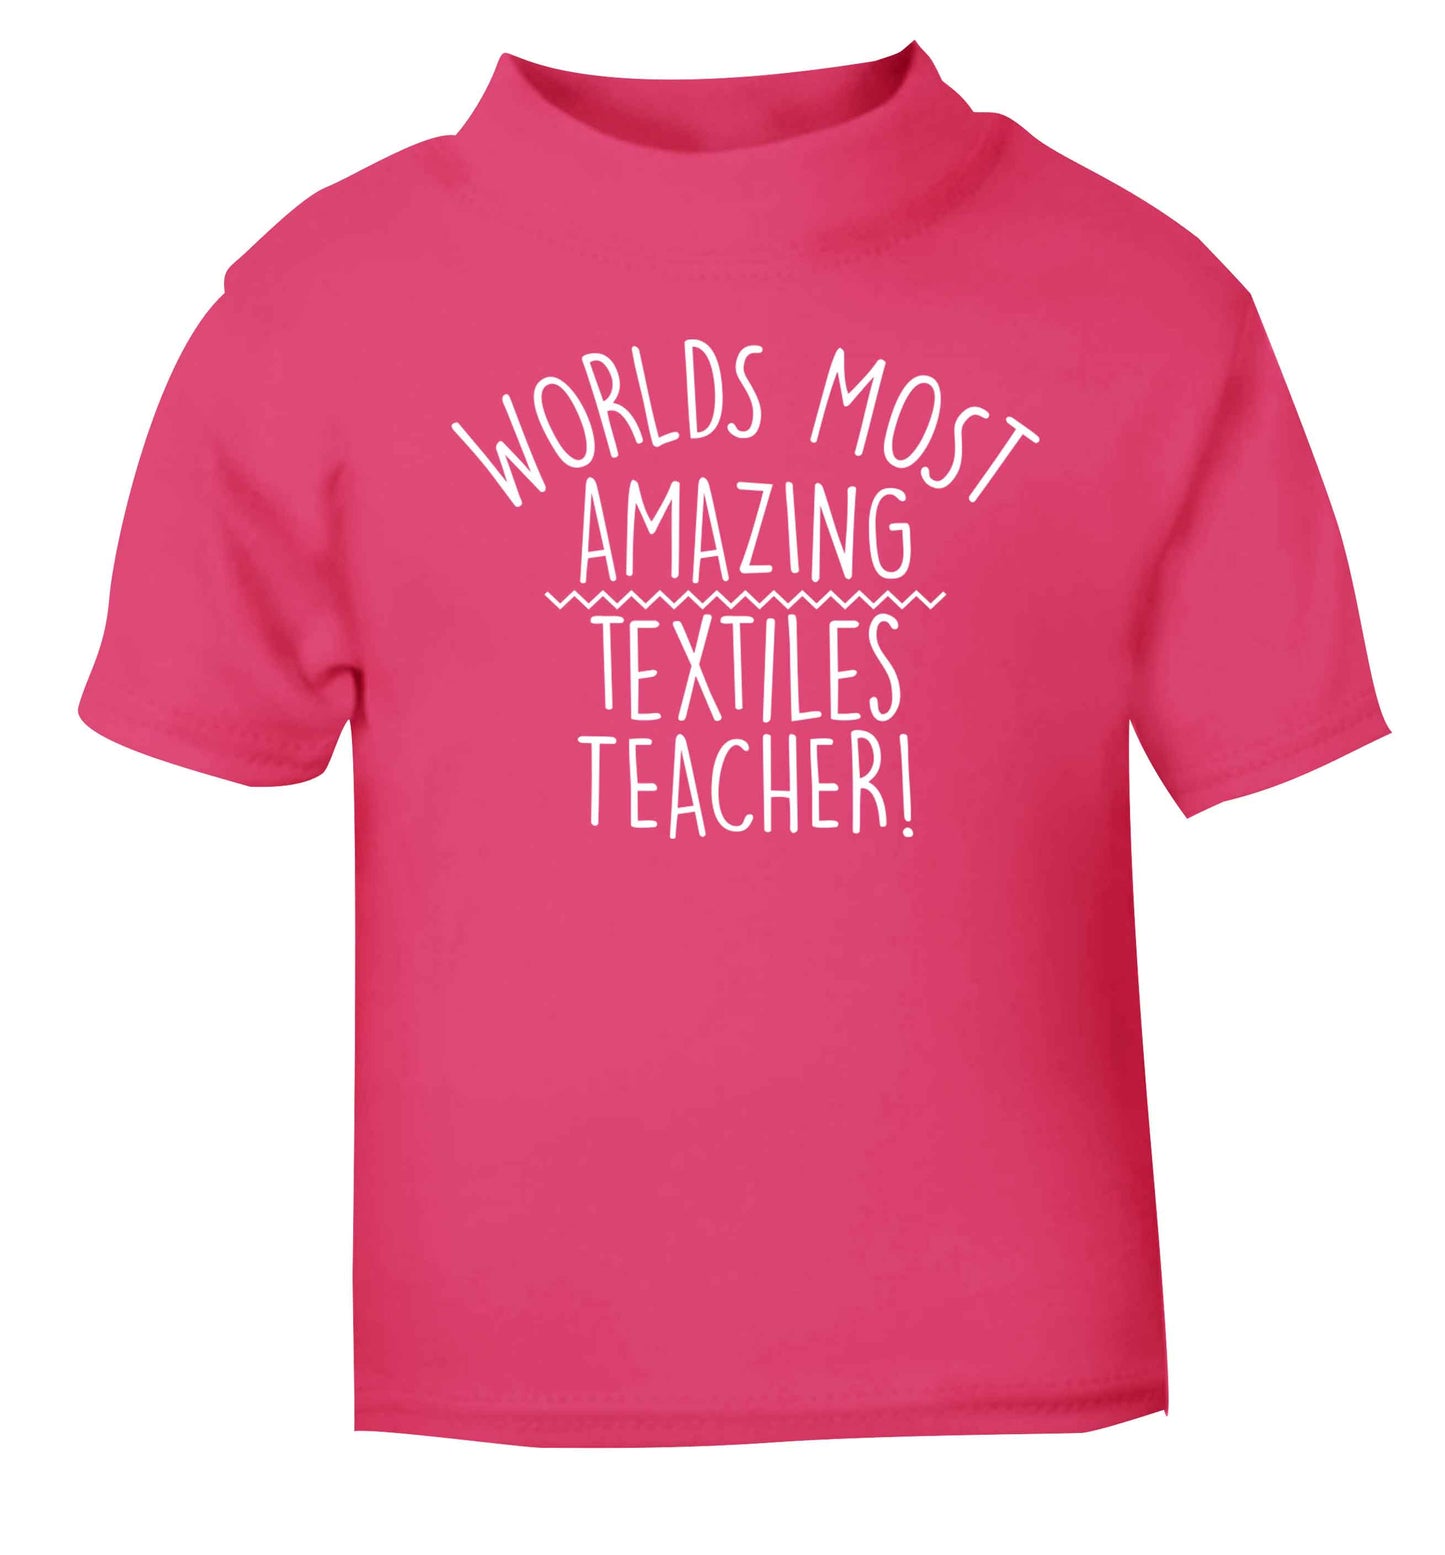 Worlds most amazing textiles teacher pink baby toddler Tshirt 2 Years